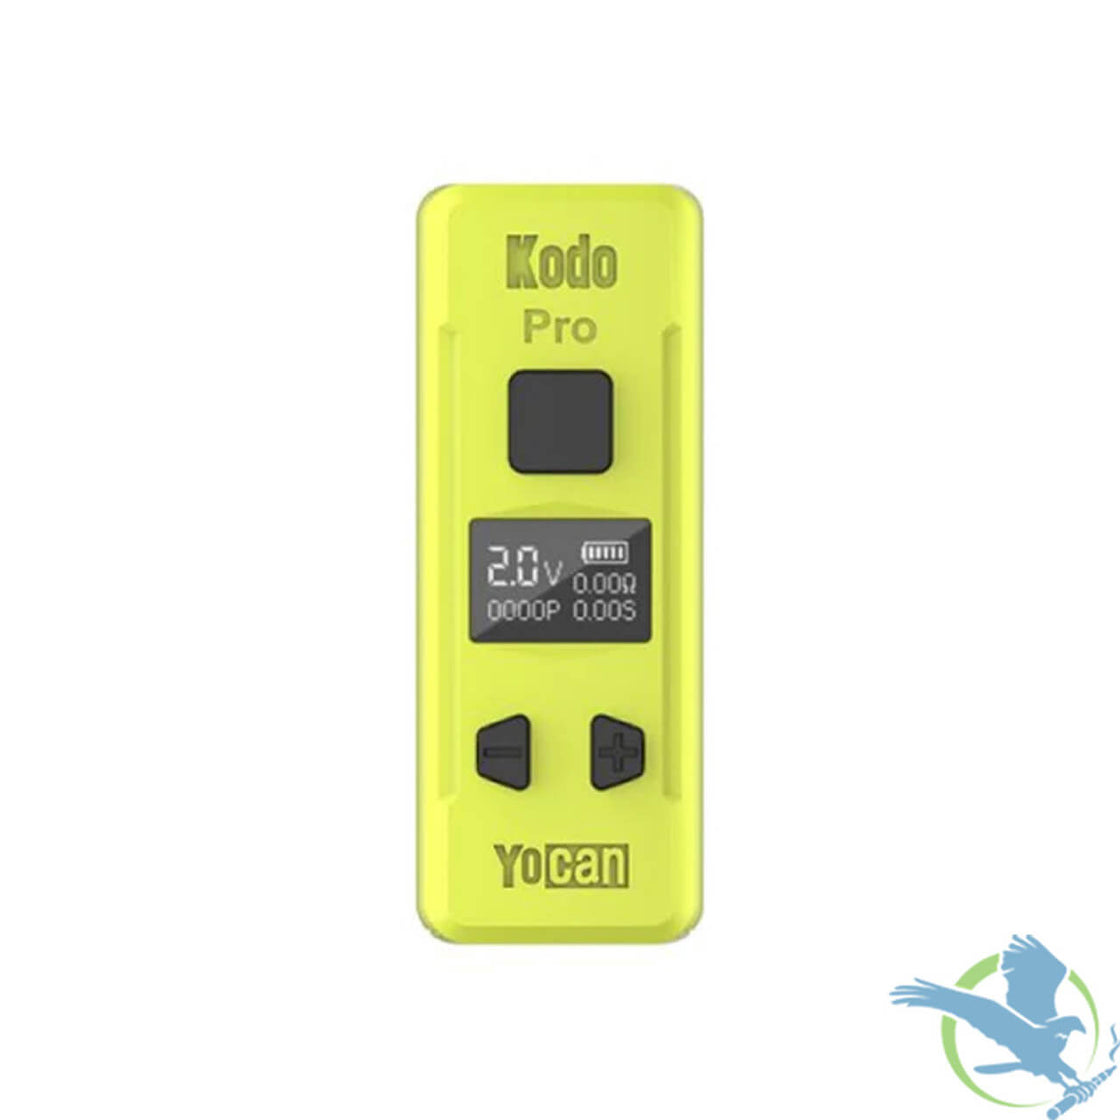 Yocan Kodo Pro 400mAh Cartridge Vaporizer Box Mod